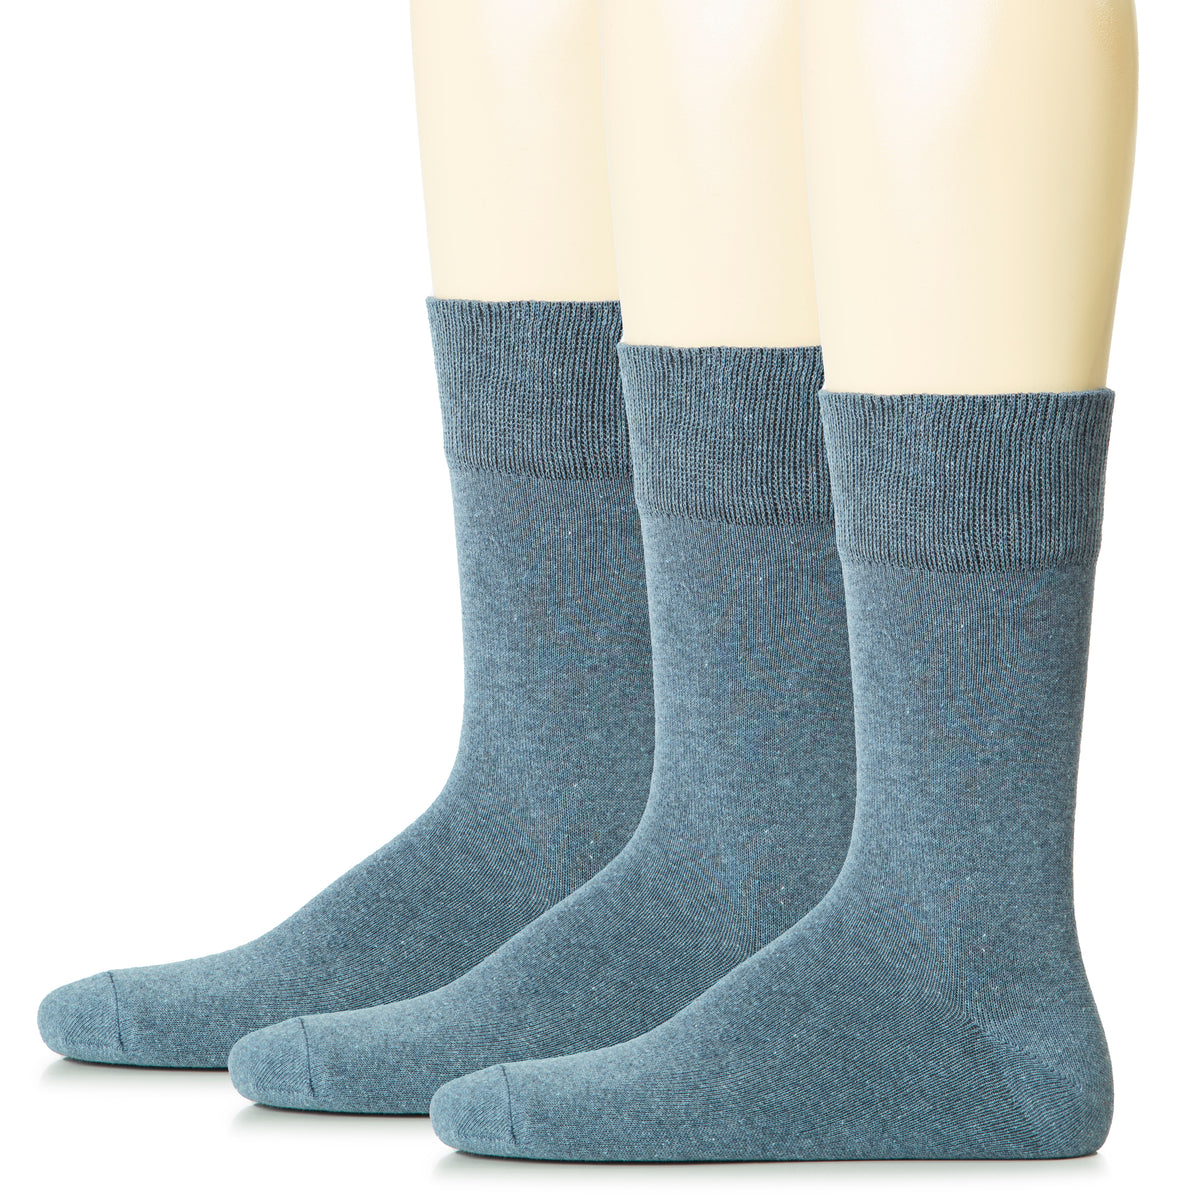 Hugh Ugoli Men Cotton Dress Socks XL / L / M / S Sizes, 3 Pairs | Shoe Size: 8-10 | Jeans Blue